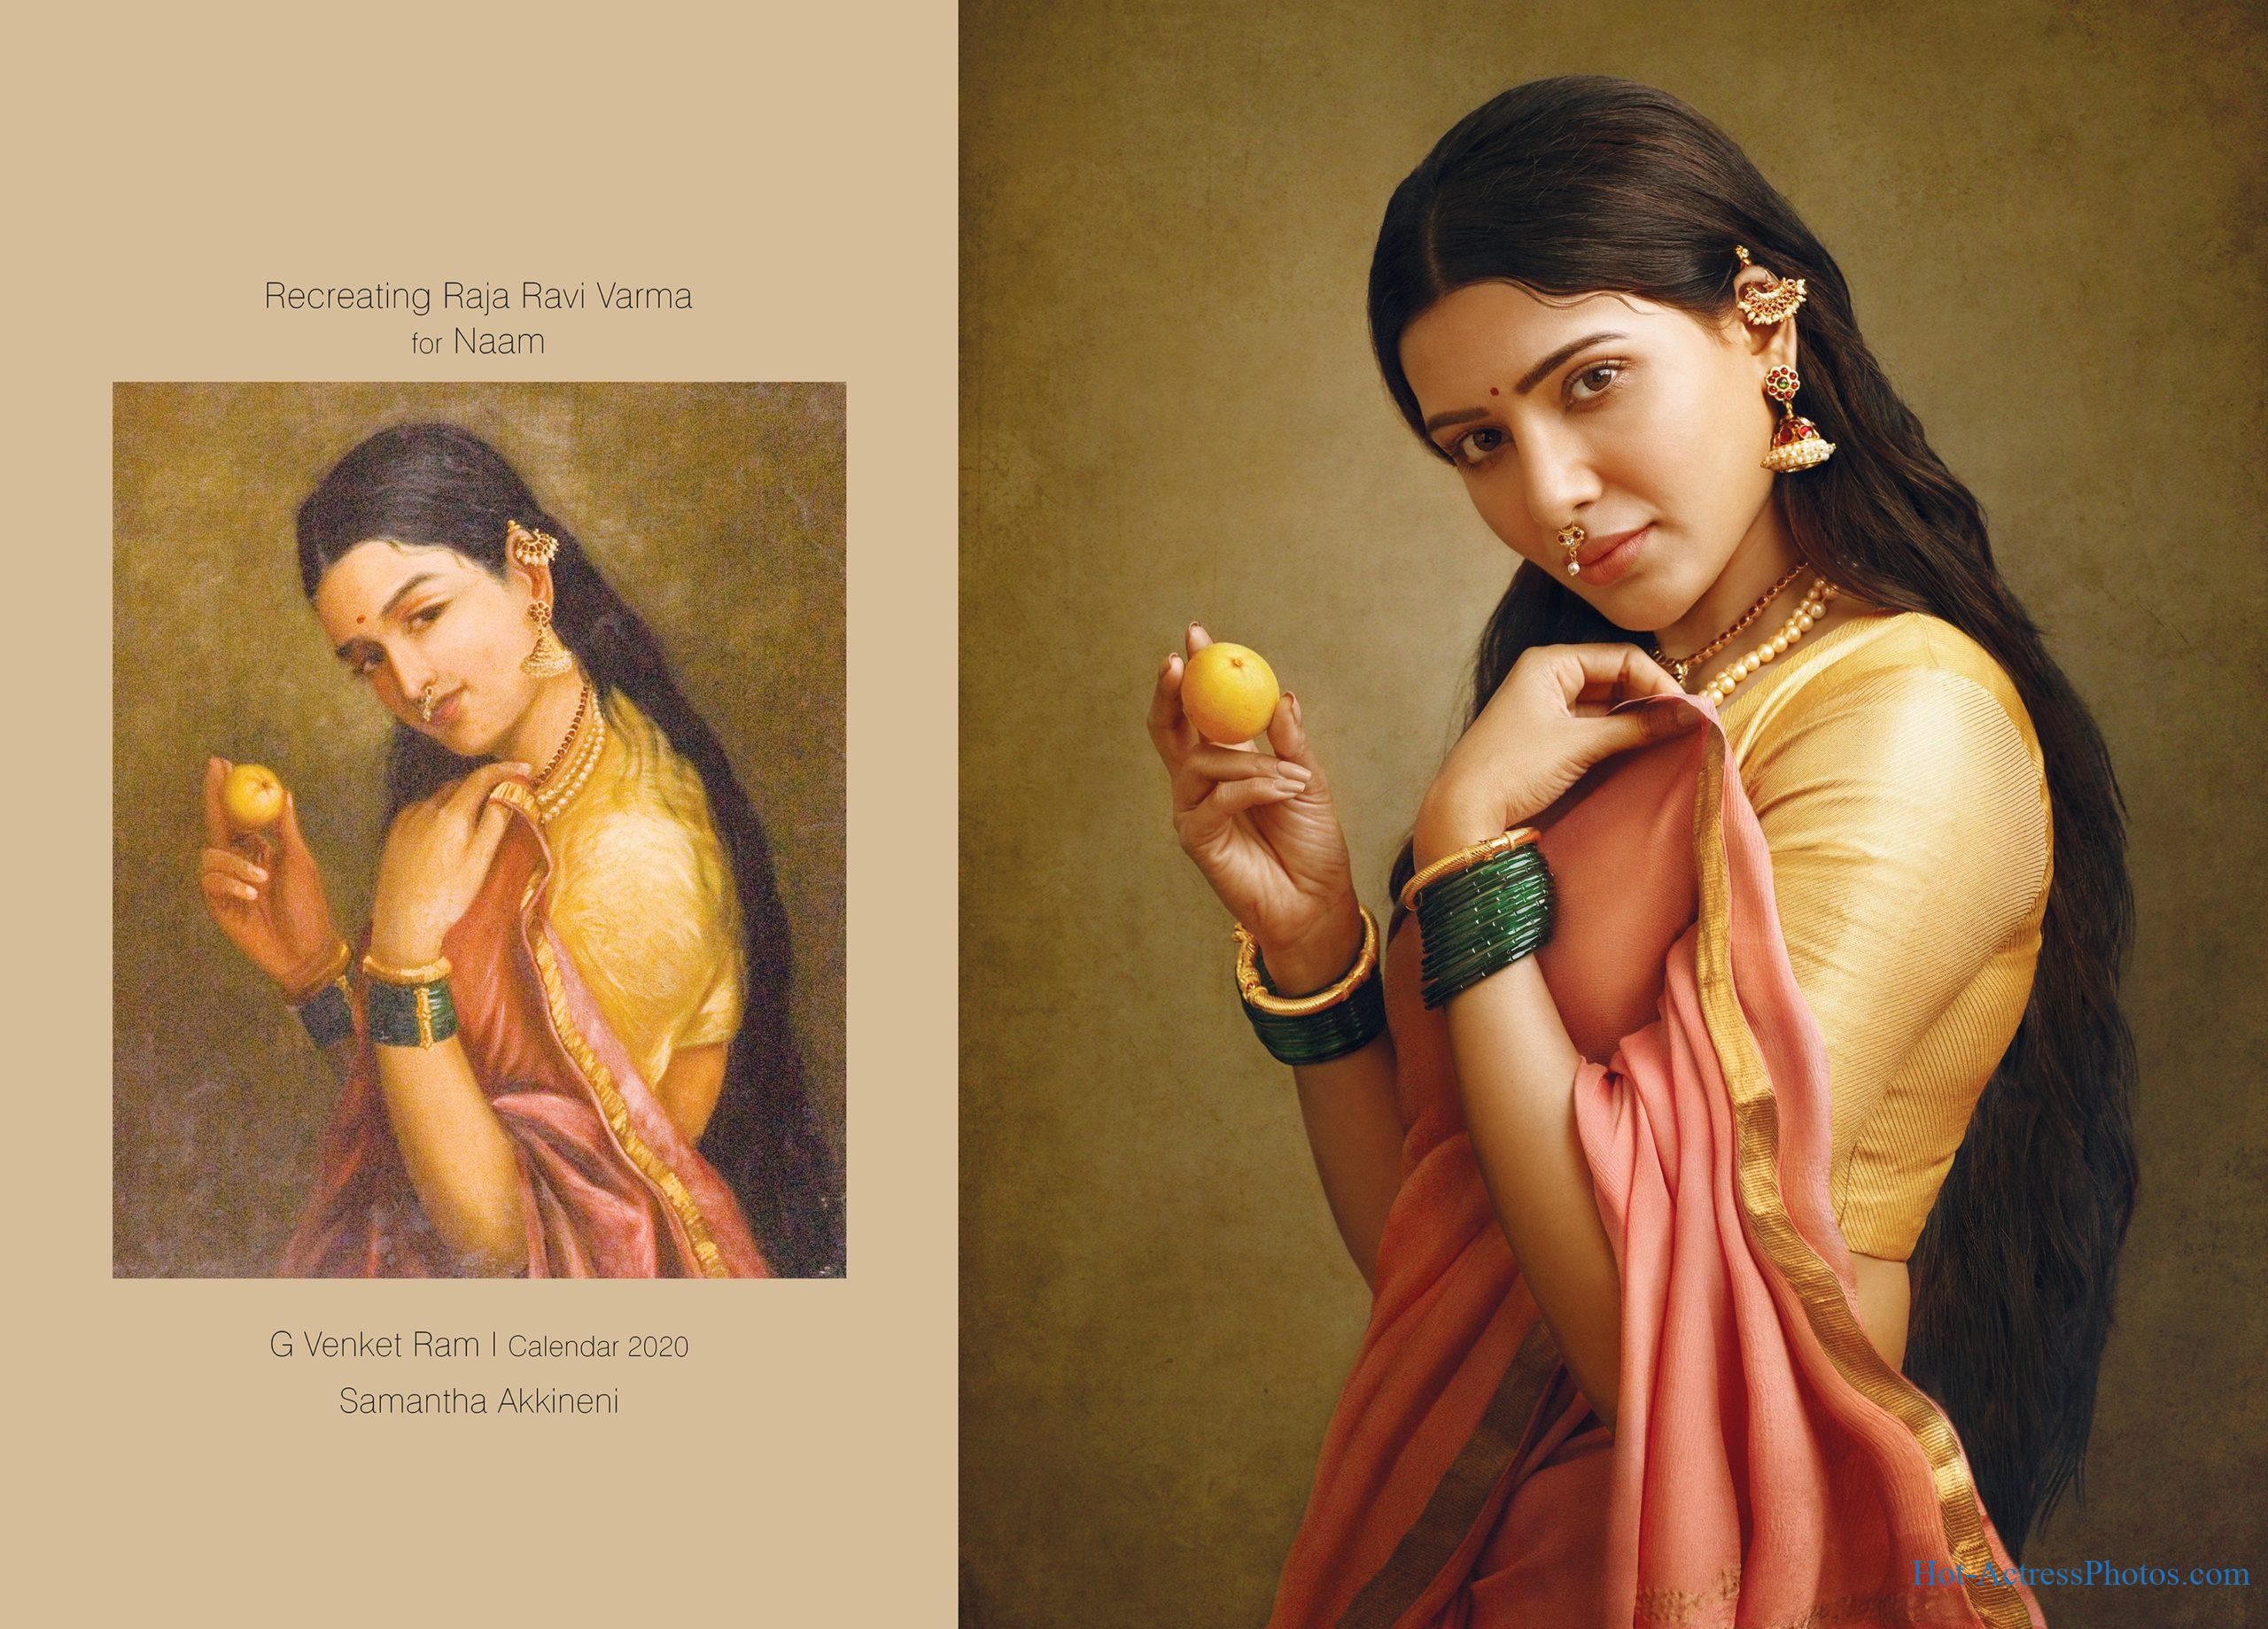 South Indian Actresses Portrait Raja Ravi Varma’s Painting in G Venket Ram’s Calendar 2020